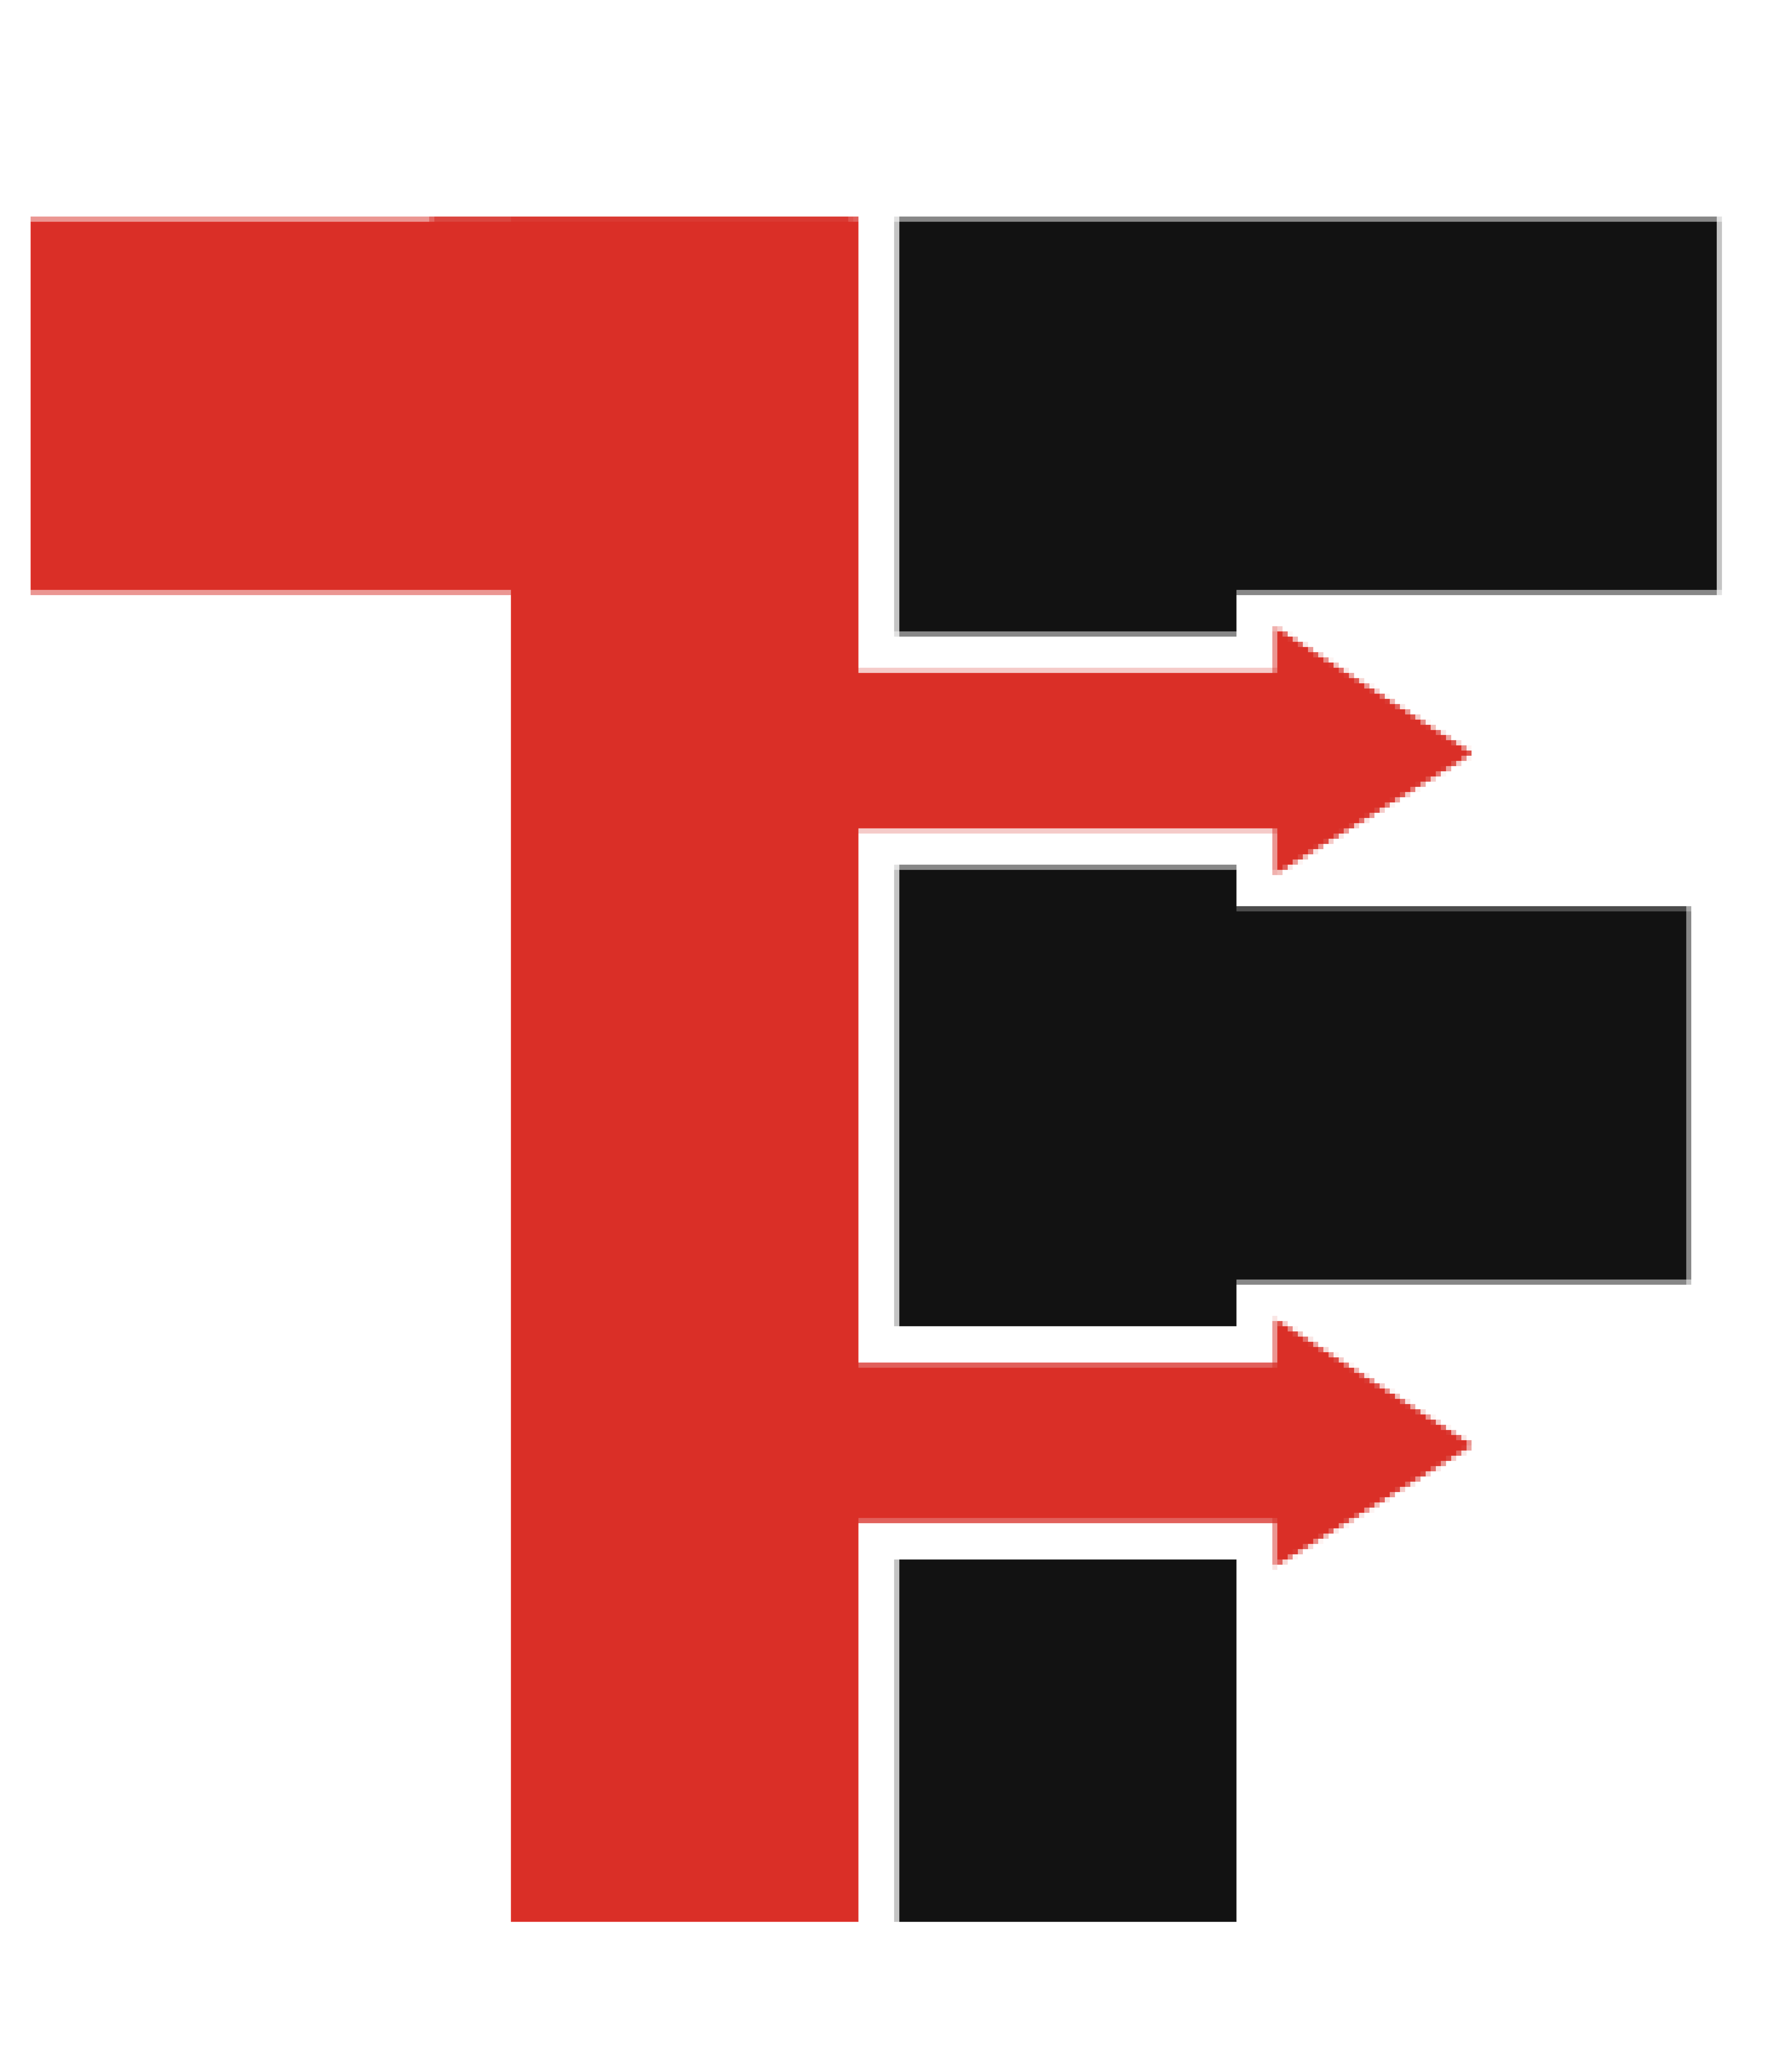 TerraFirma Foundation Systems Logo